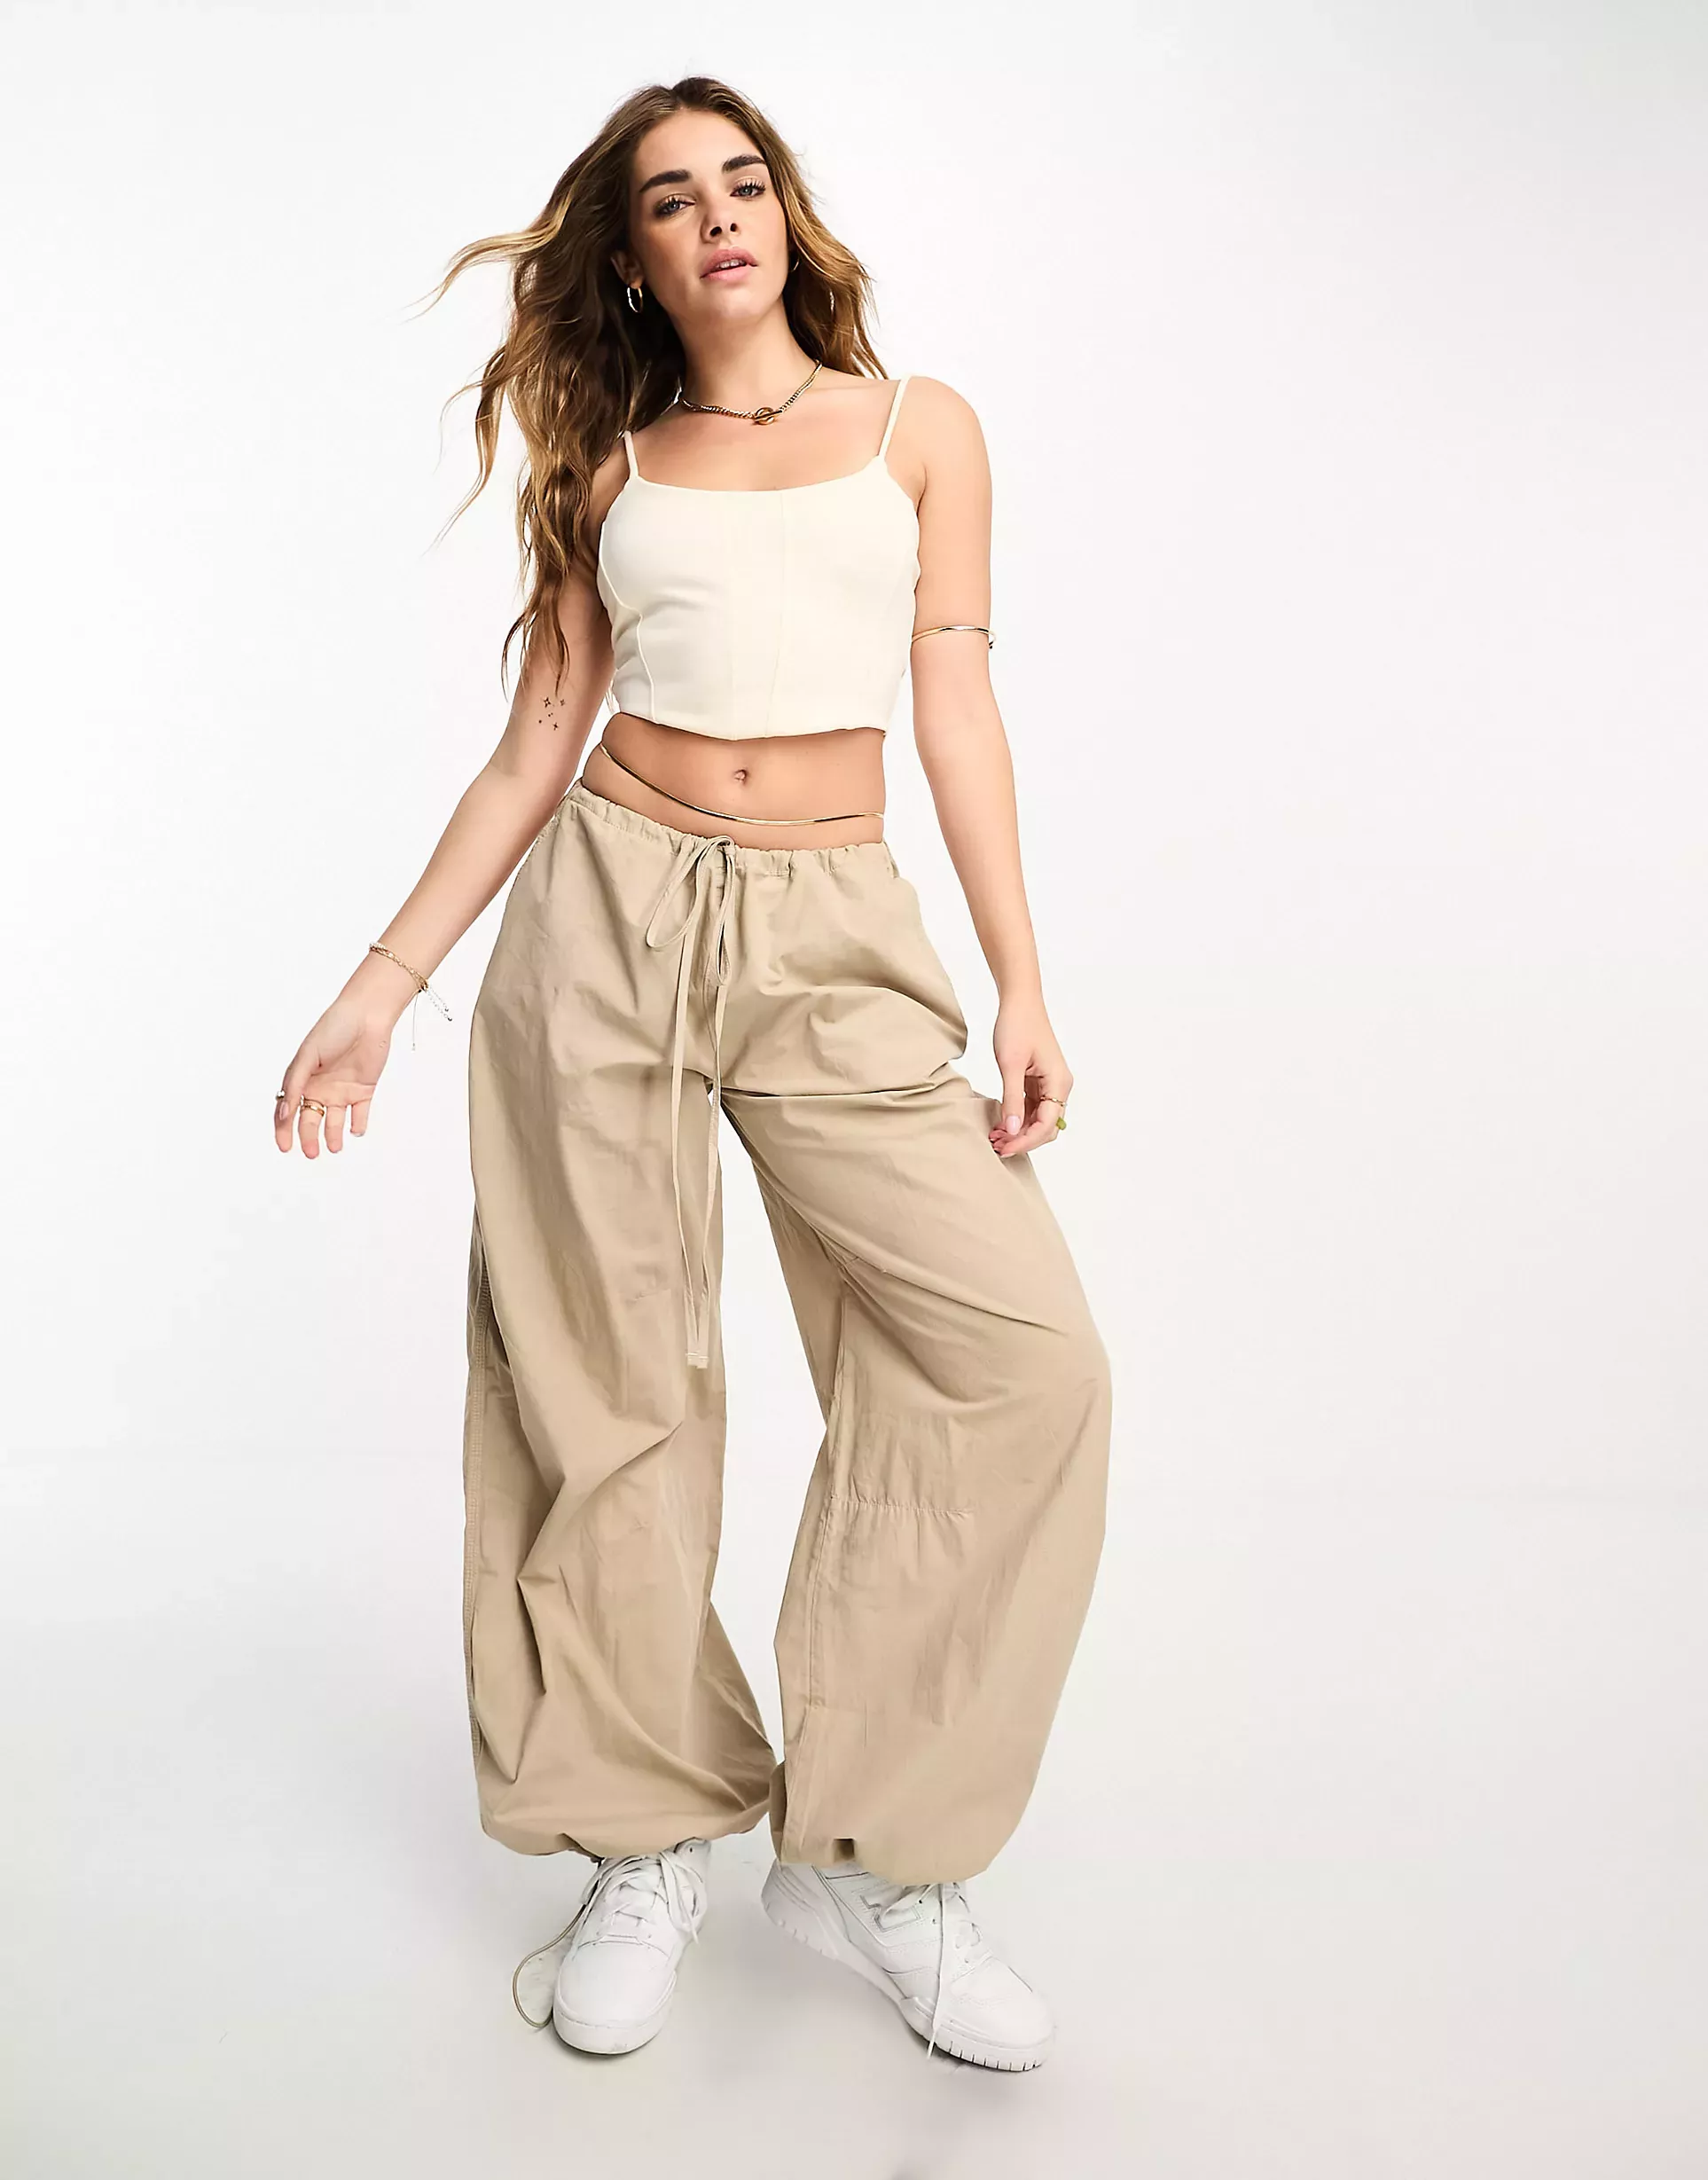 ASOS DESIGN denim midi skirt with … curated on LTK